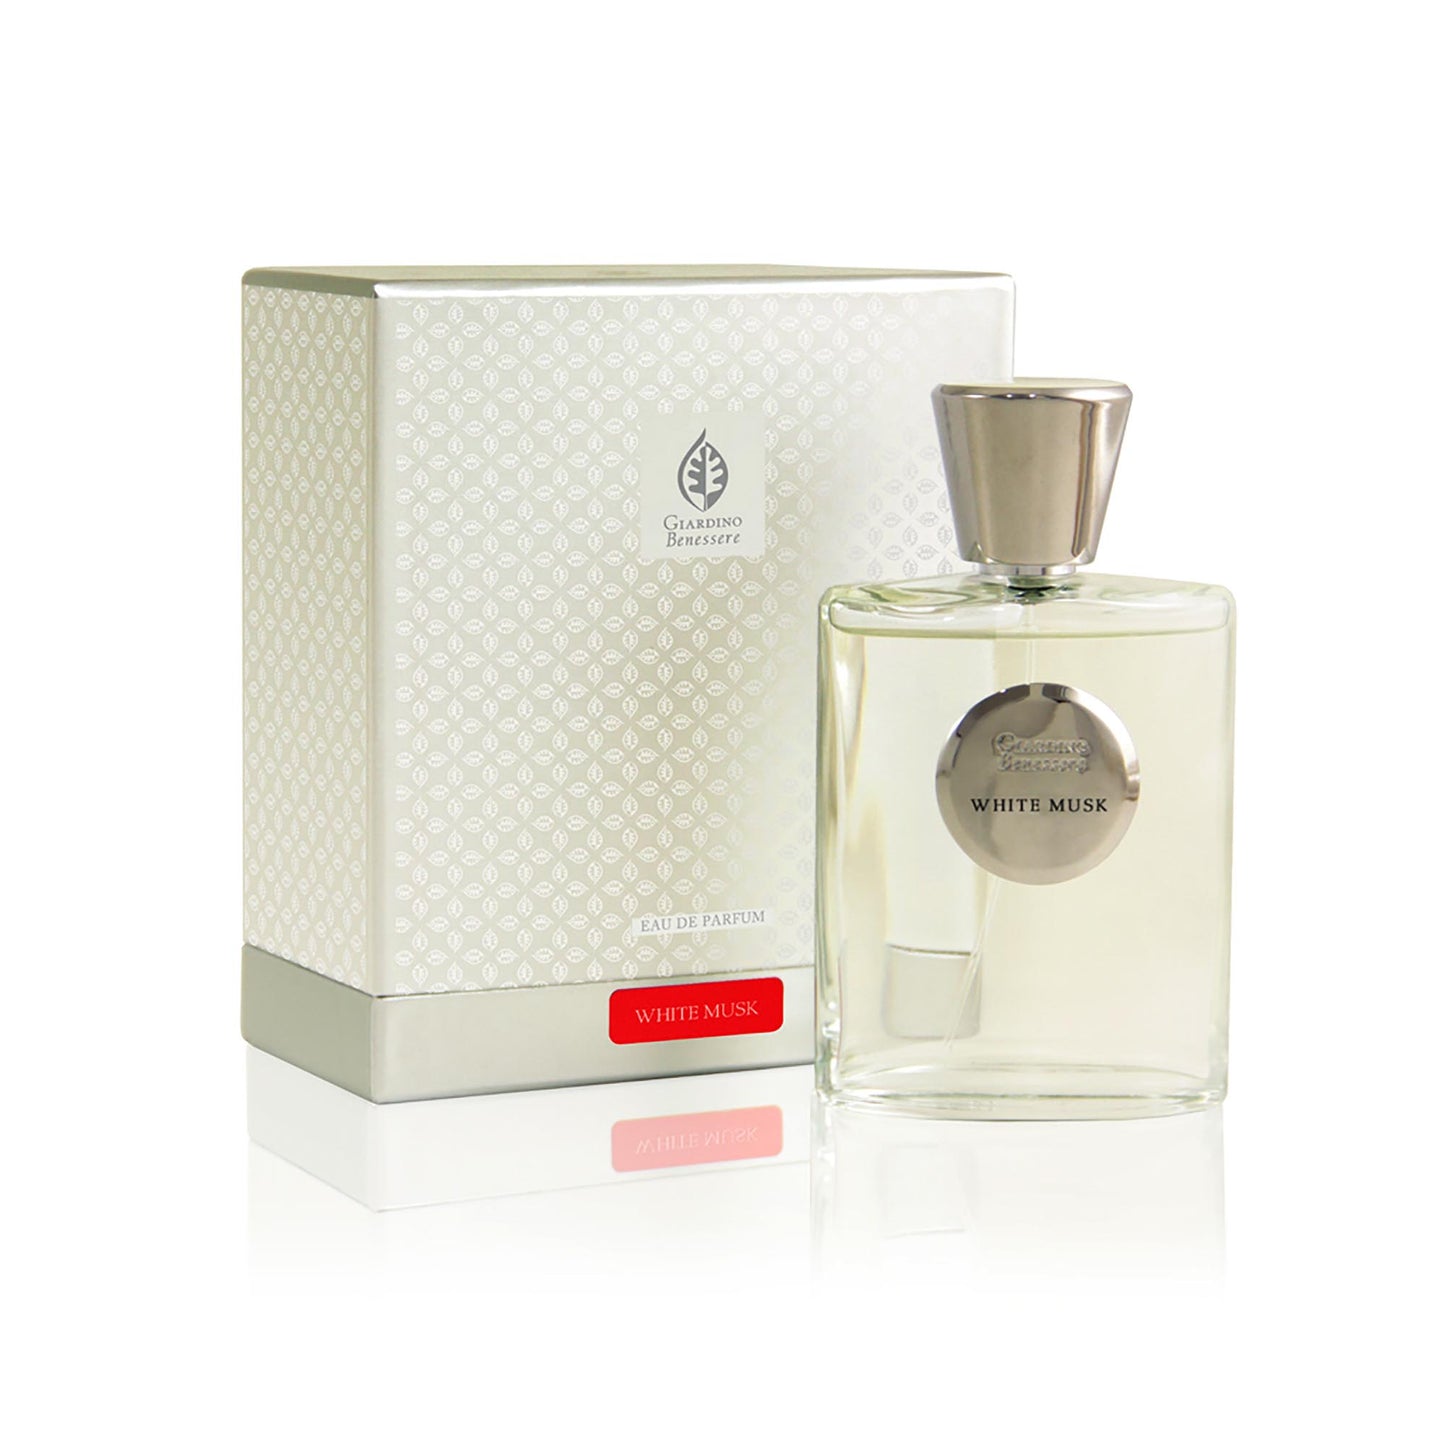 WHITE MUSK 1.5ml Sample Vial - Eau de Parfum